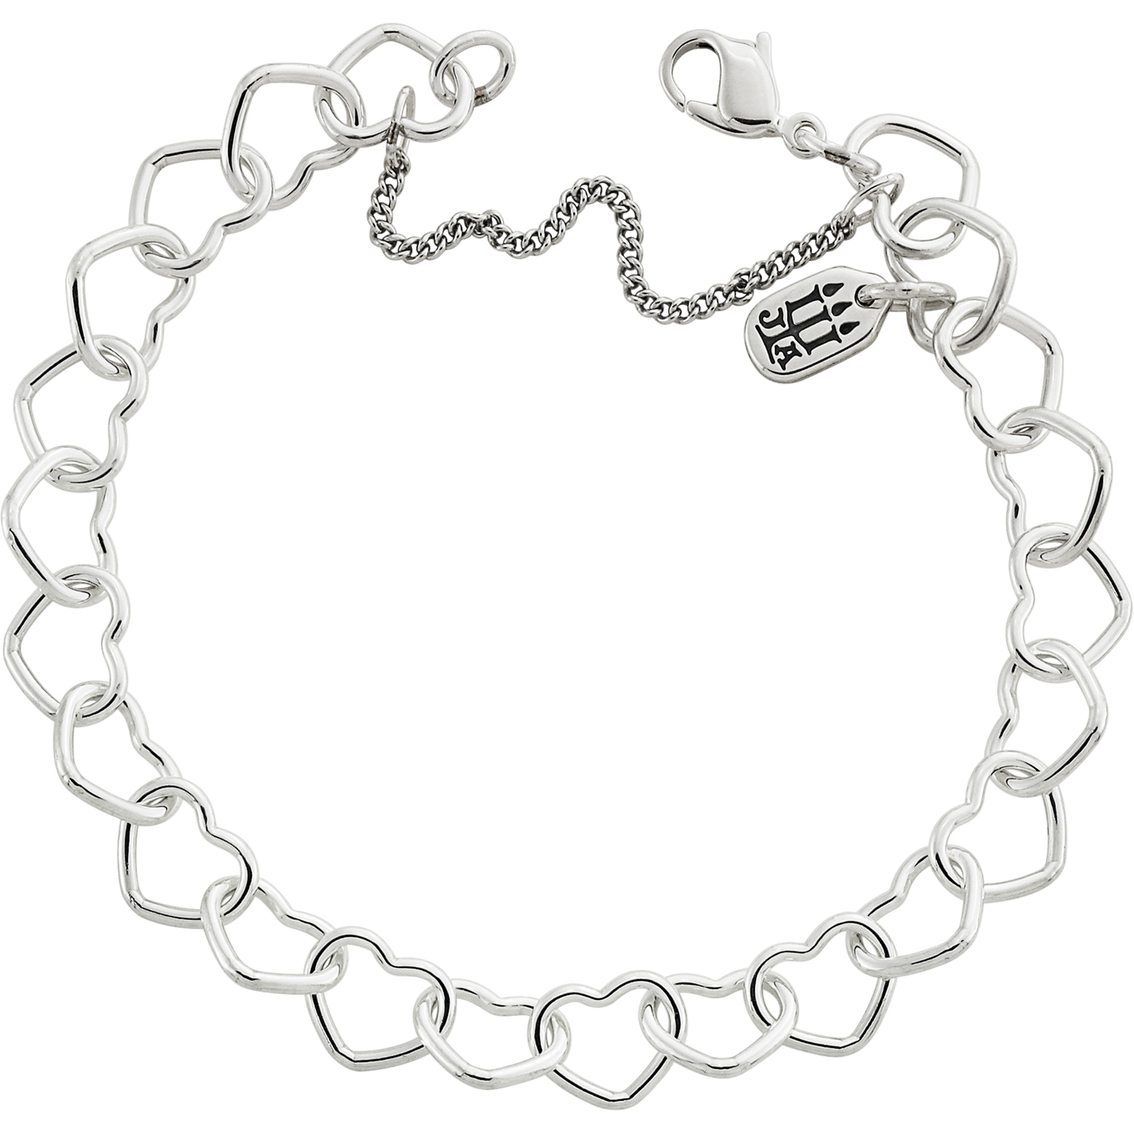 James Avery Connected Hearts Charm Bracelet | Silver Bracelets ...